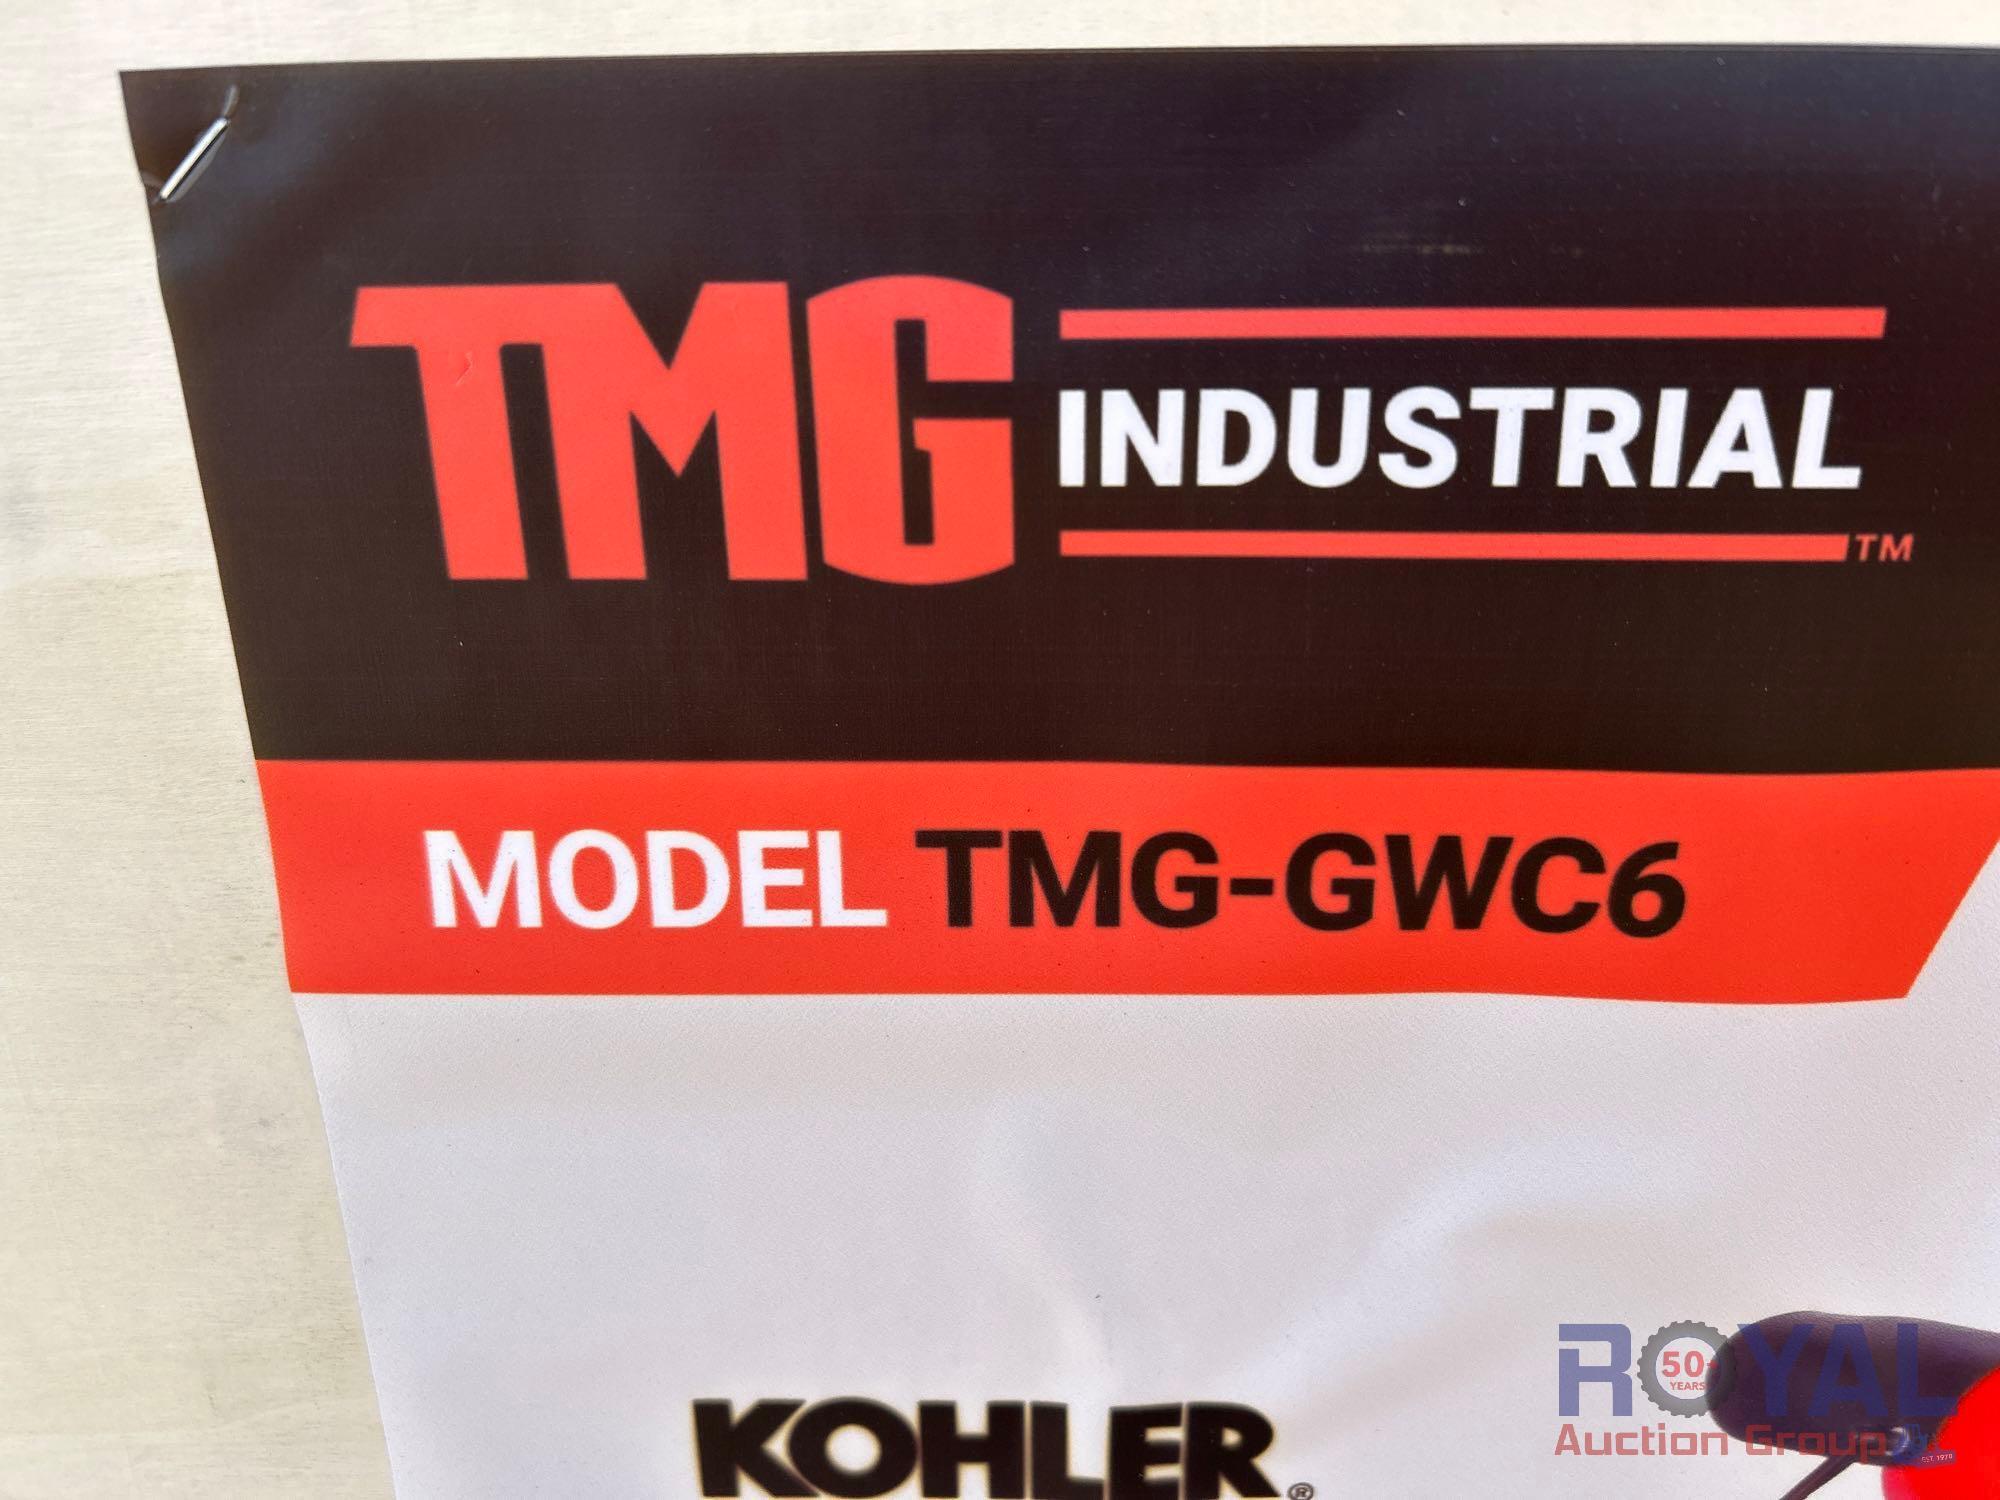 2024 TMG Industrial GWC6 6in Kohler Powered Wood Chipper